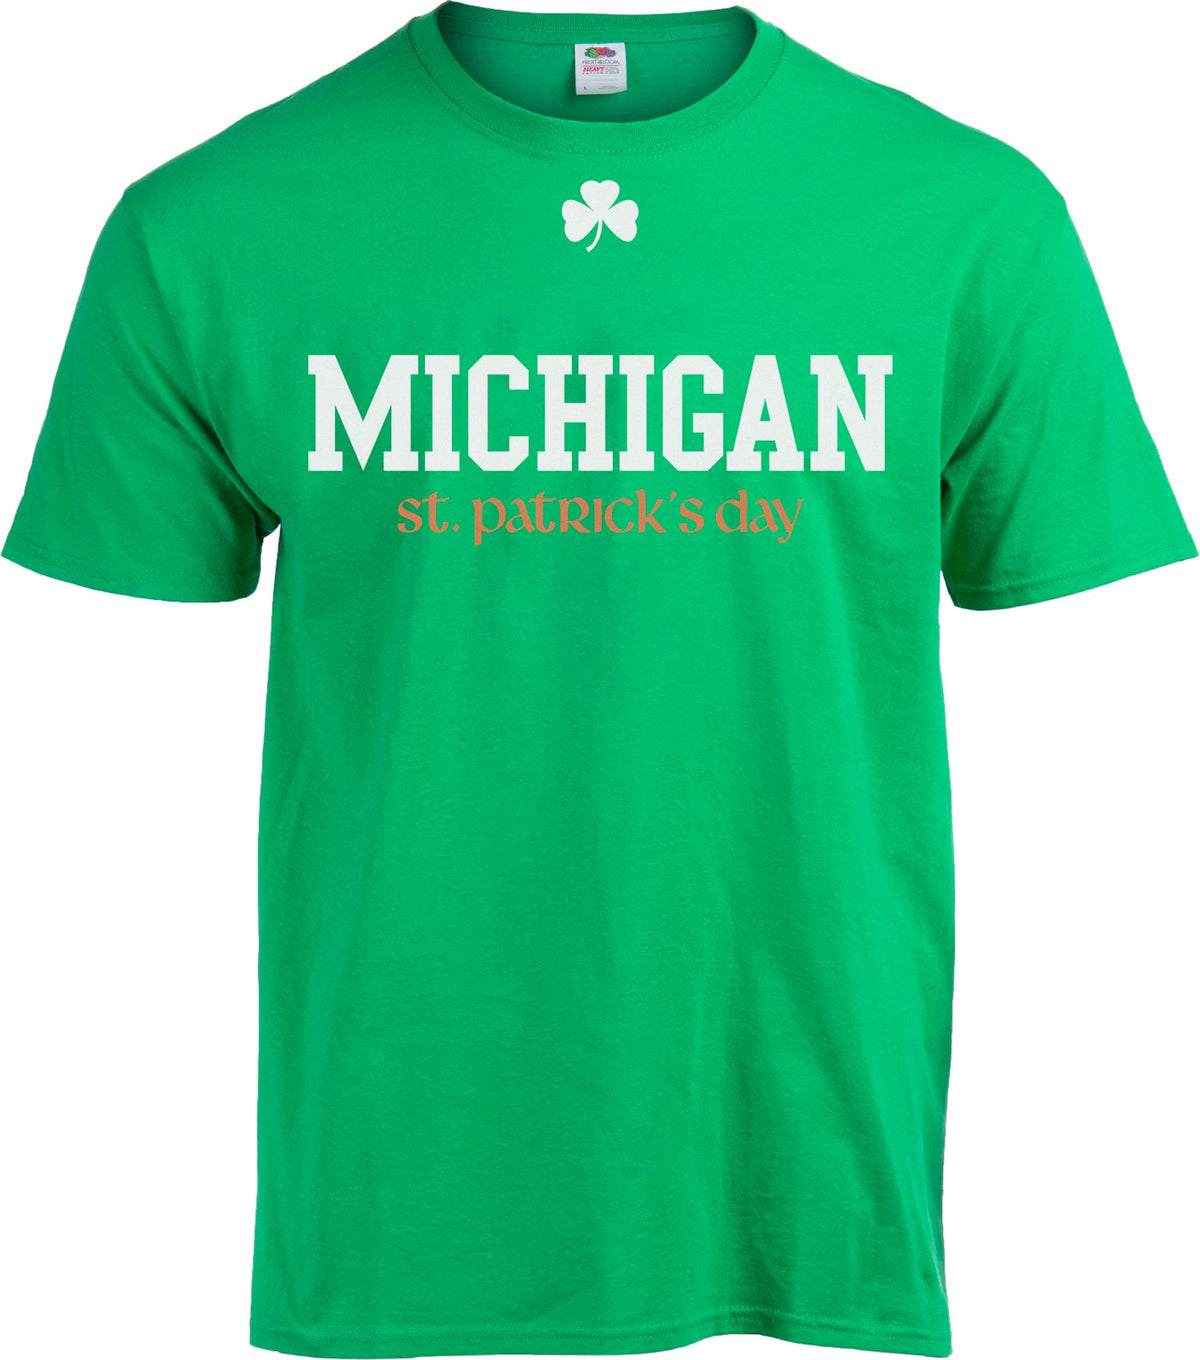 Michigan St. Patrick's Day - Michigan Pride Drinking Party T-shirt - Men's/Unisex